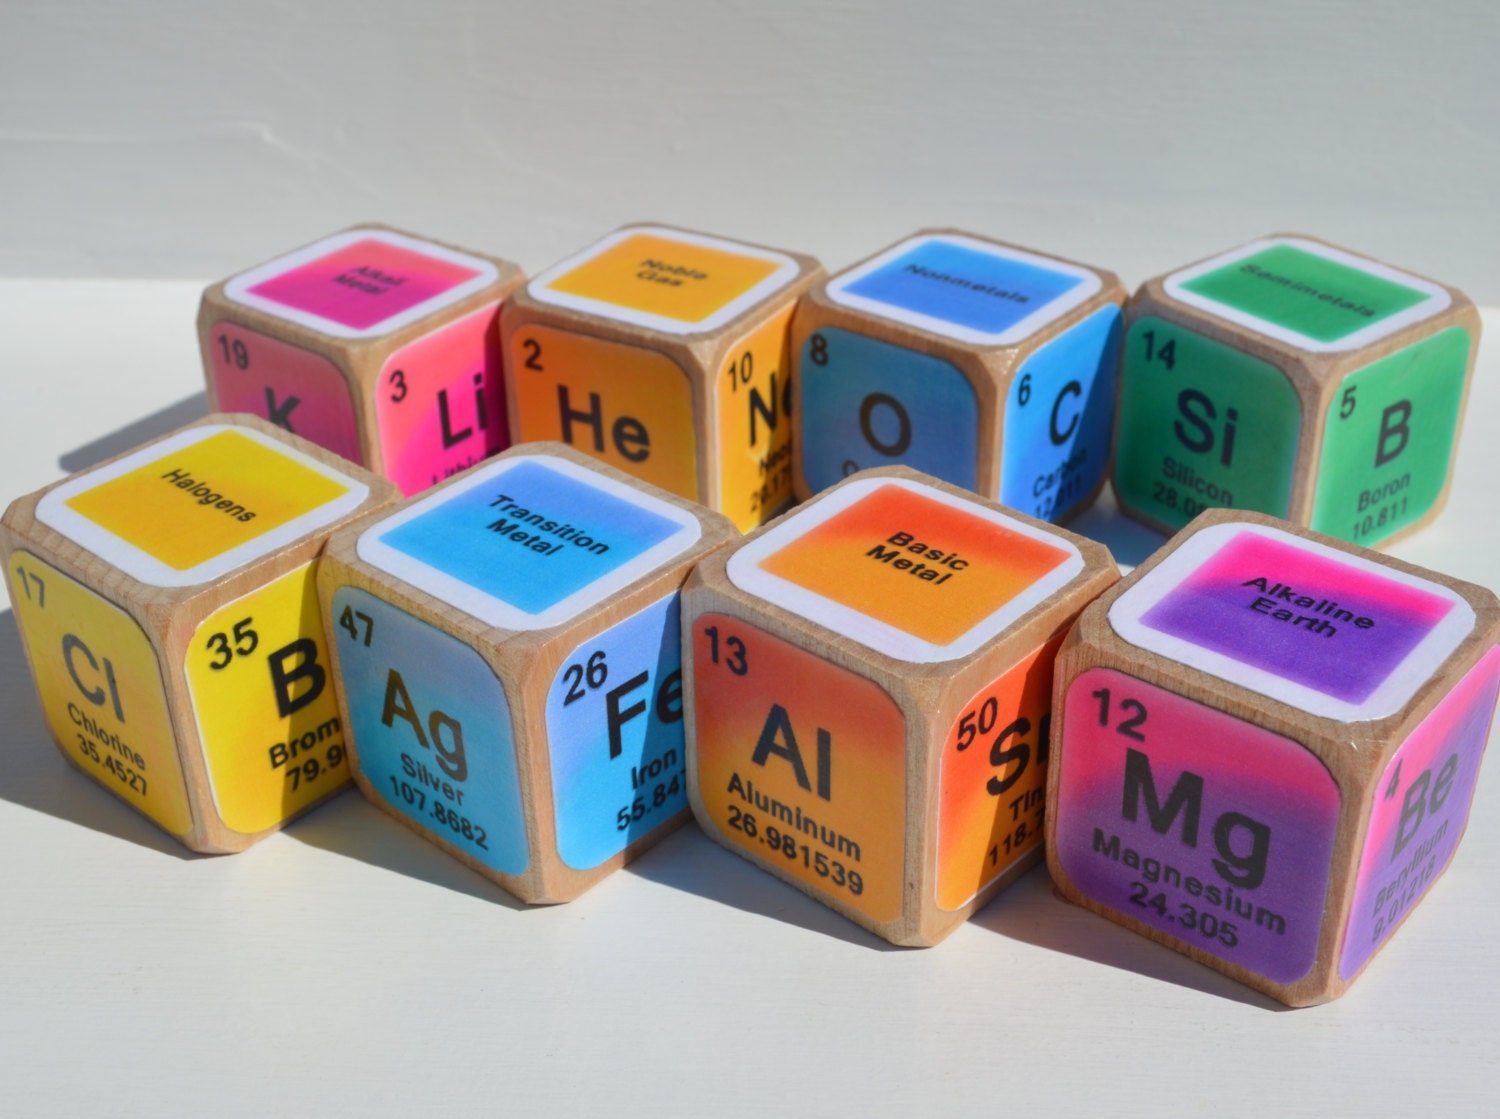 different blocks in periodic table